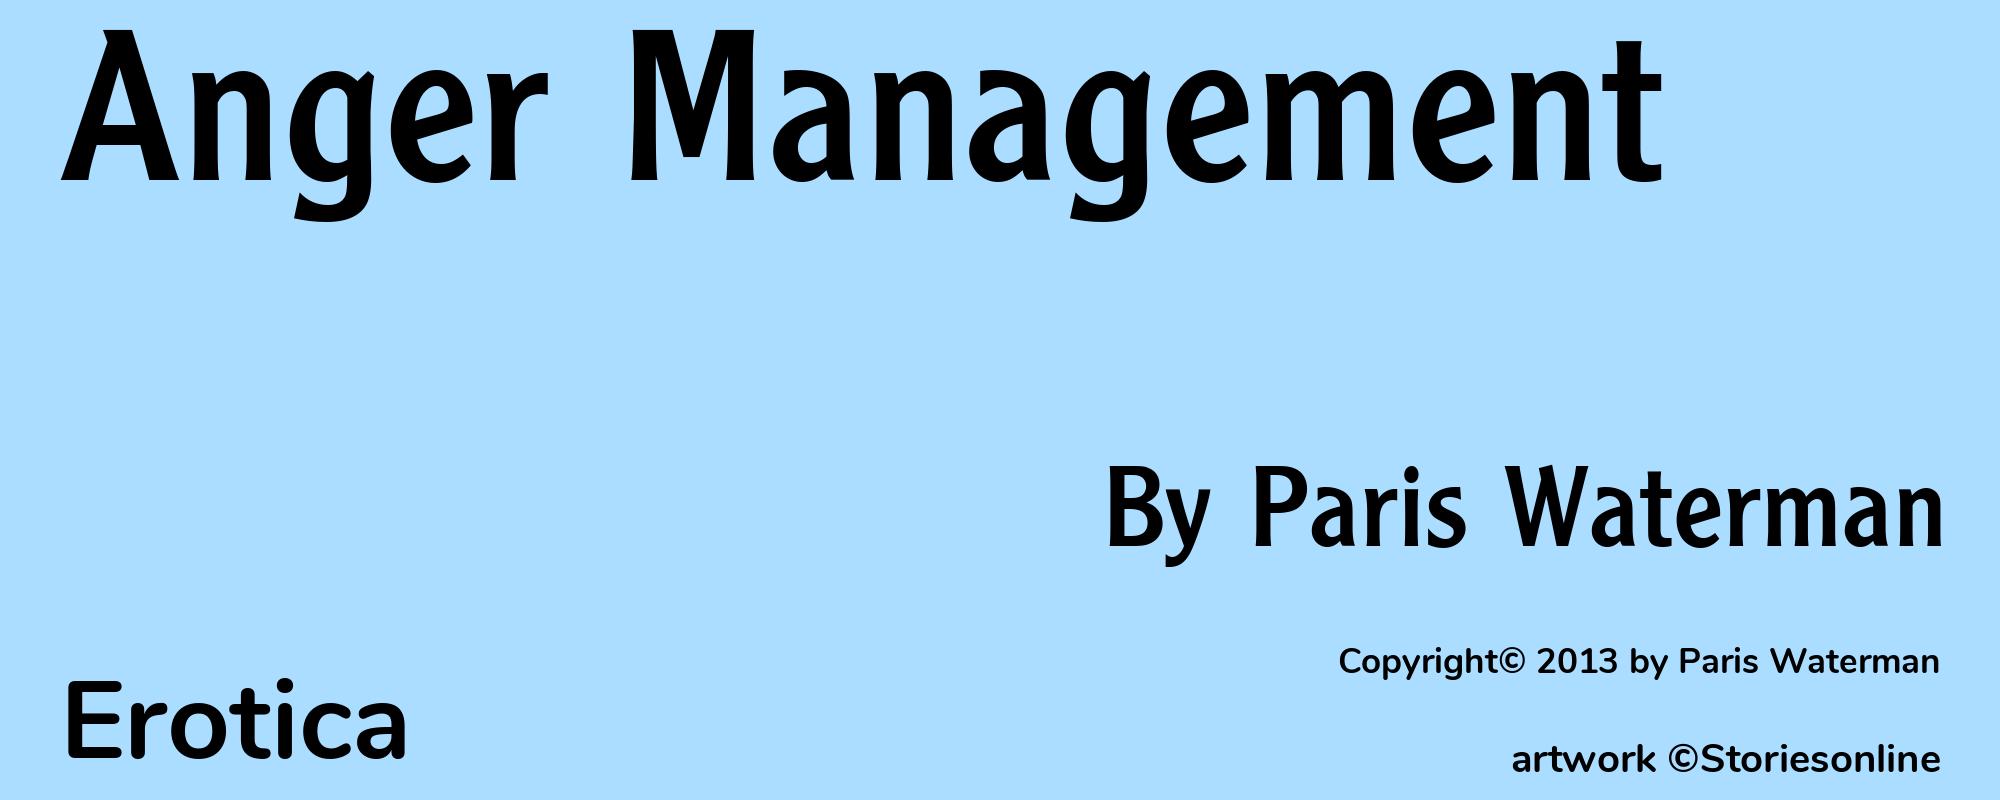 Anger Management - Cover